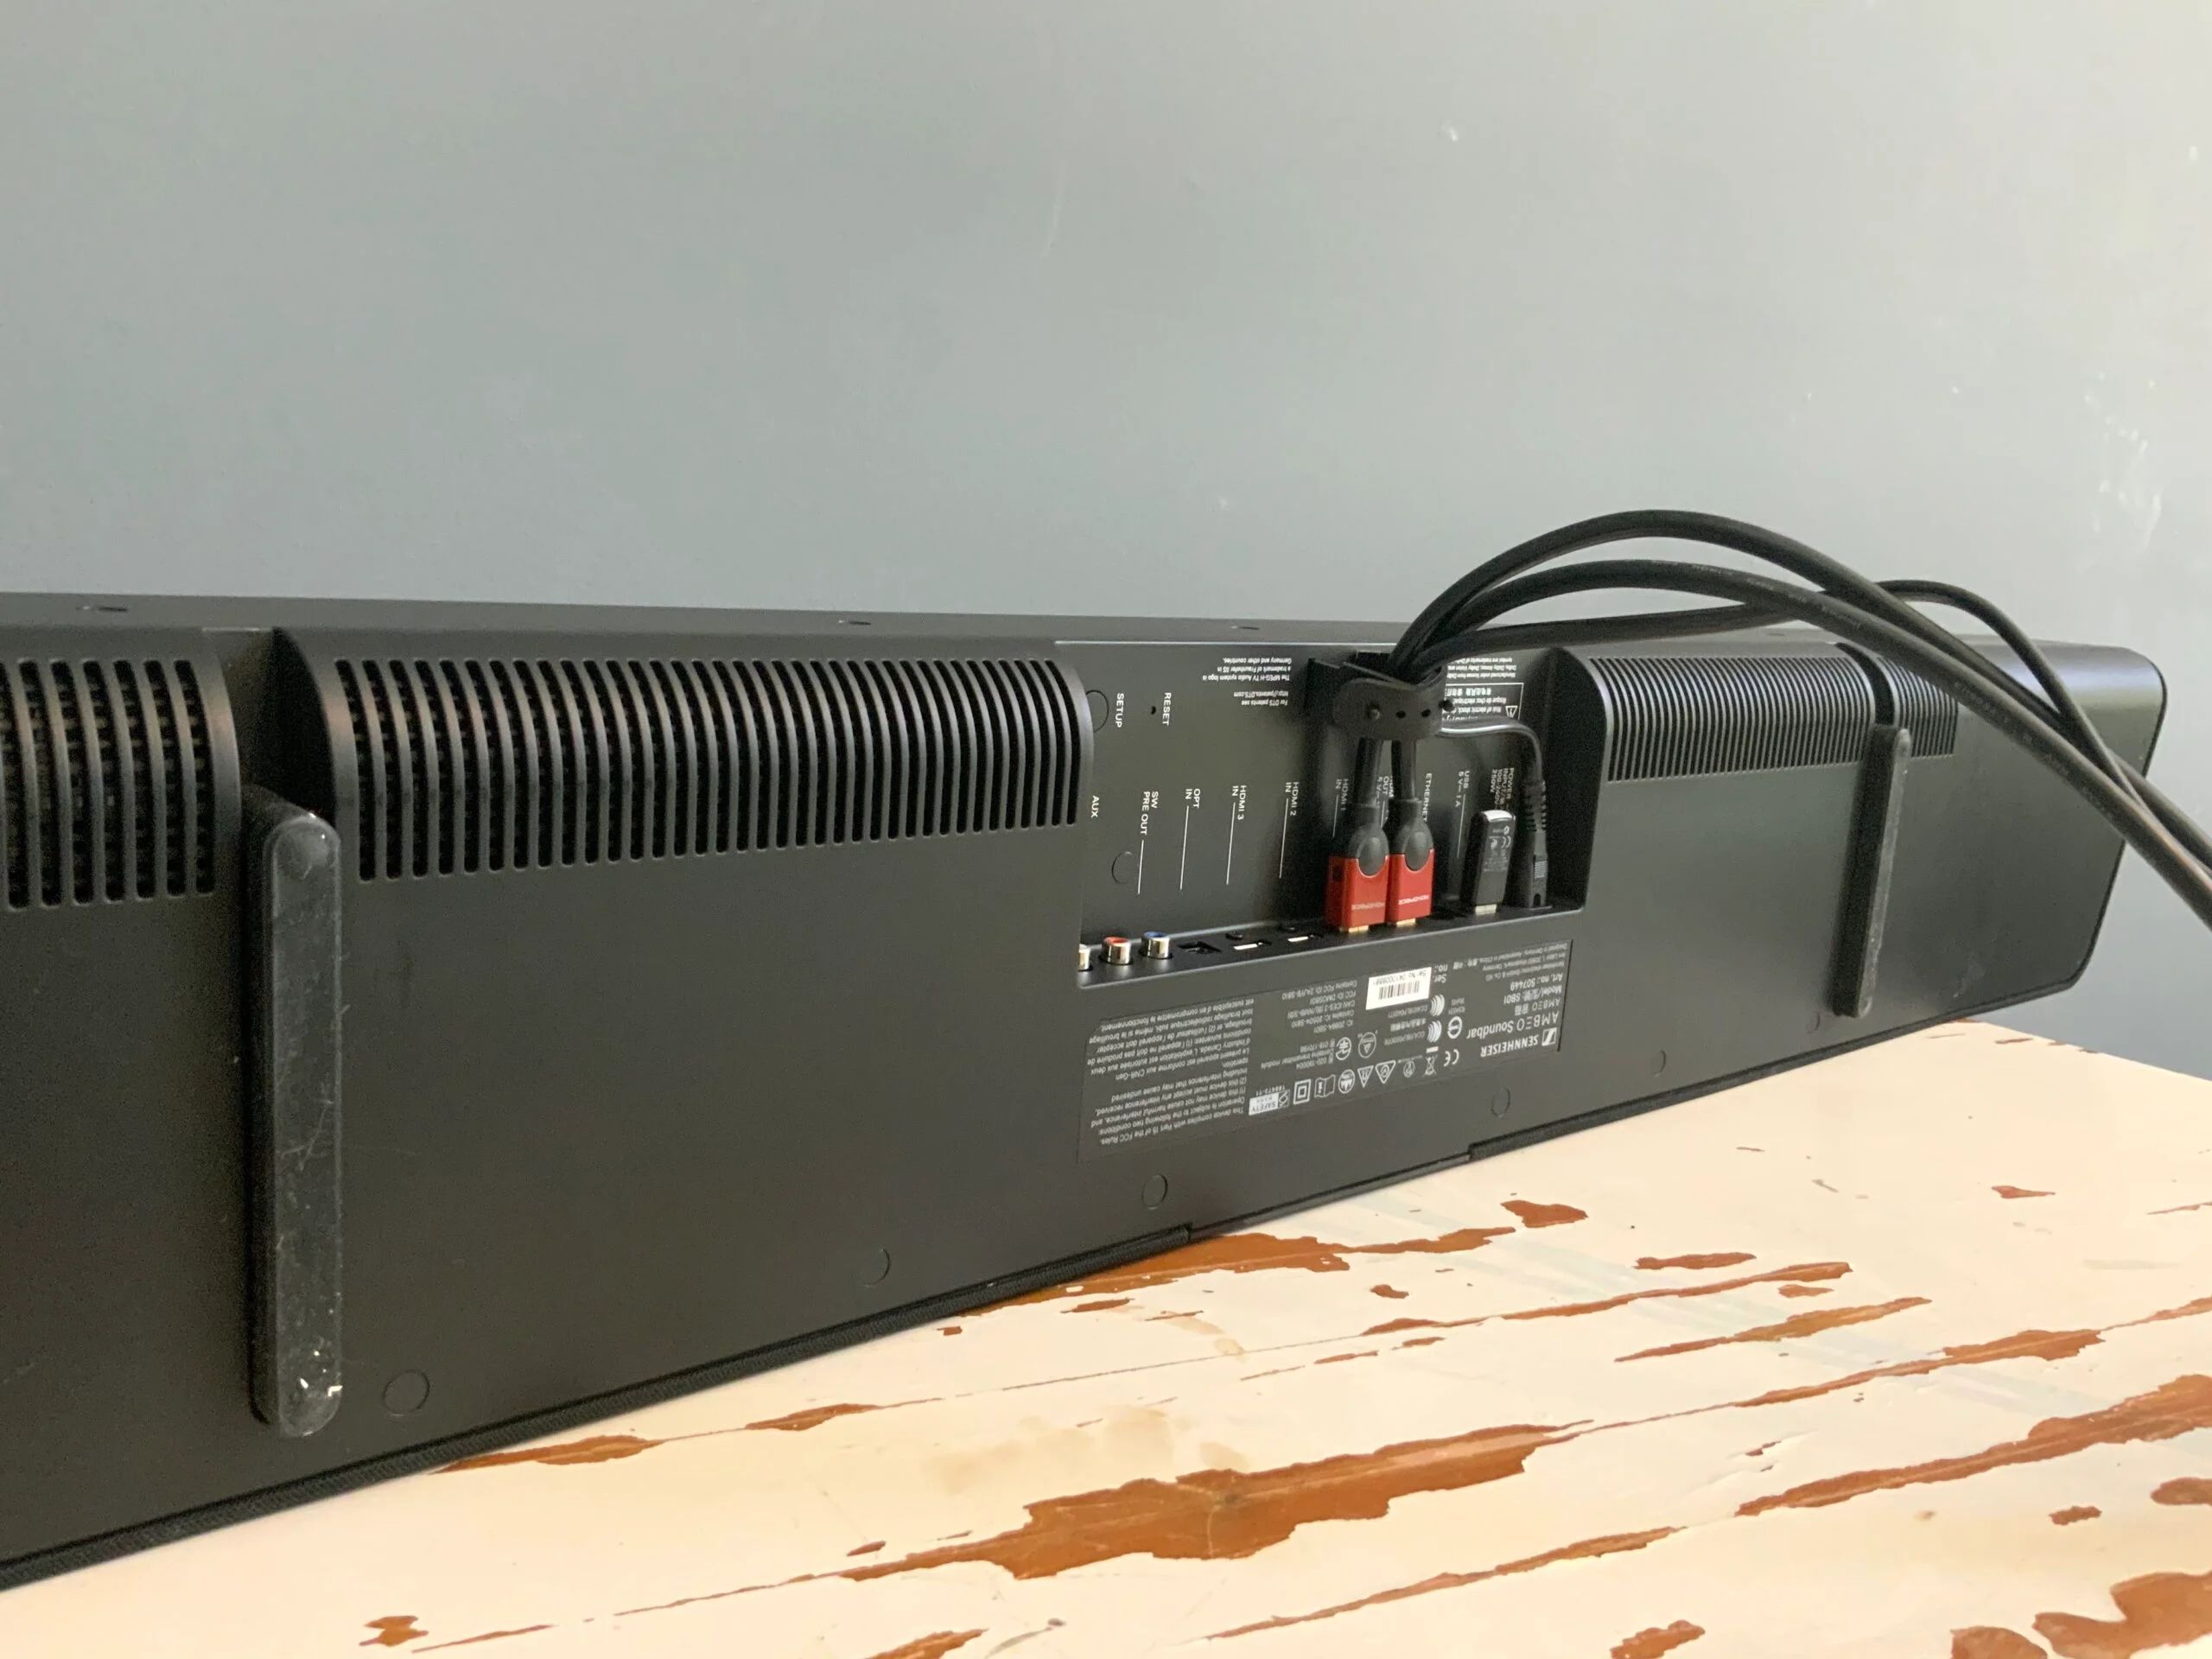 How To Connect A Vizio Soundbar To A Samsung TV Using HDMI